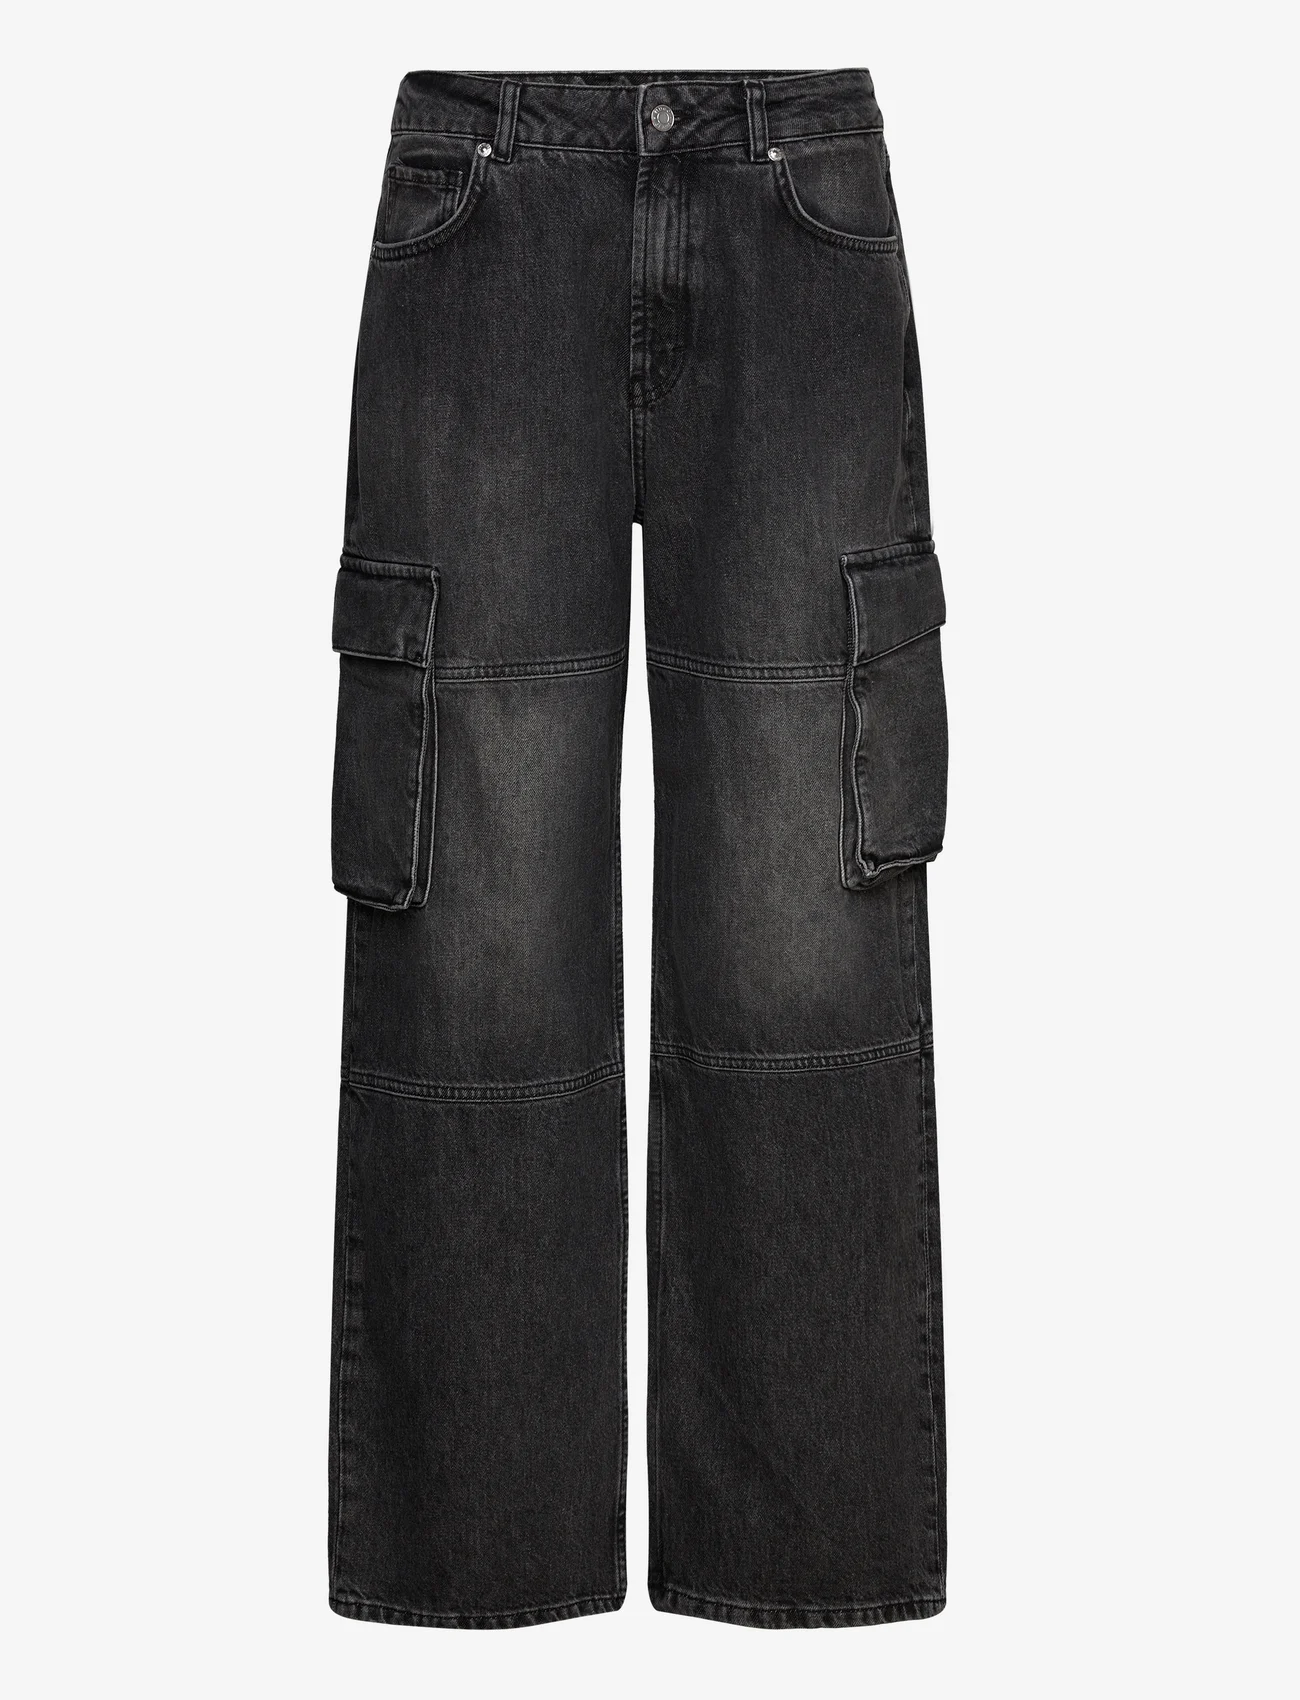 HUGO - Galese - brede jeans - dark grey - 0